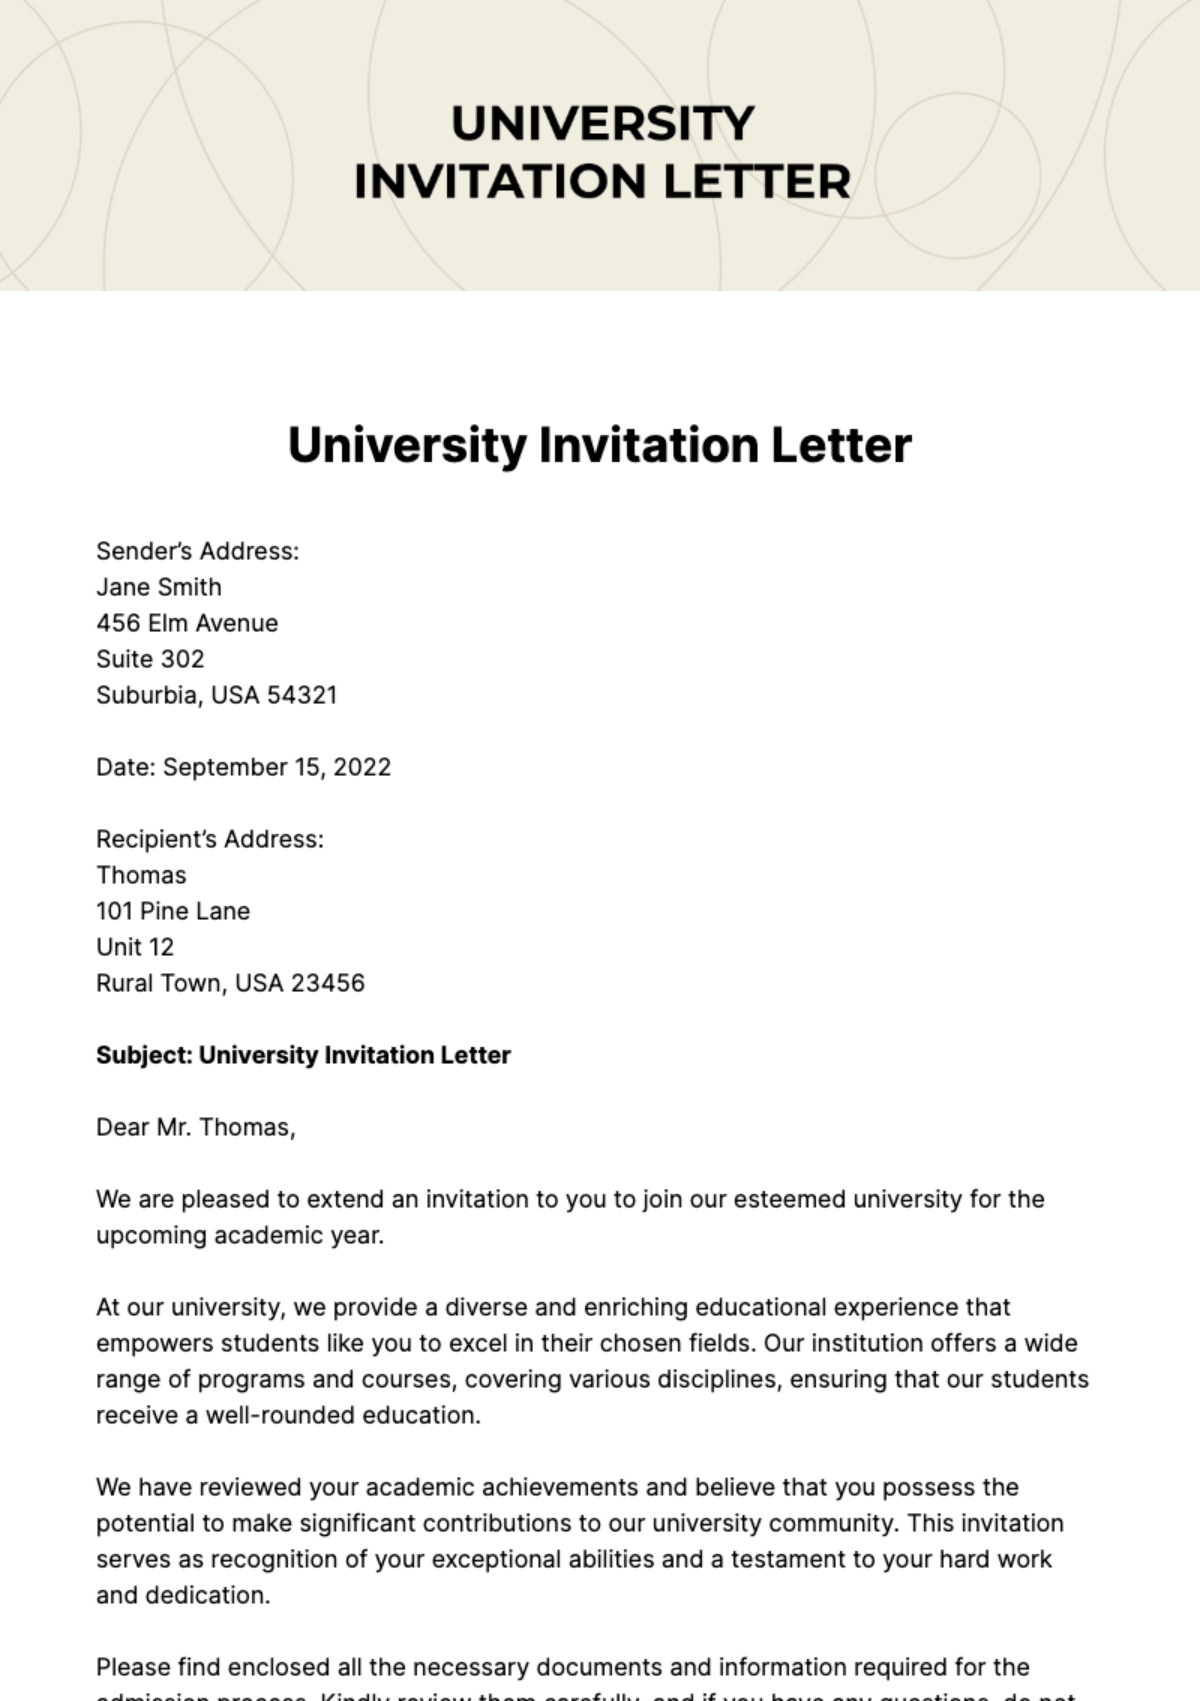 Free University Invitation Letter Template